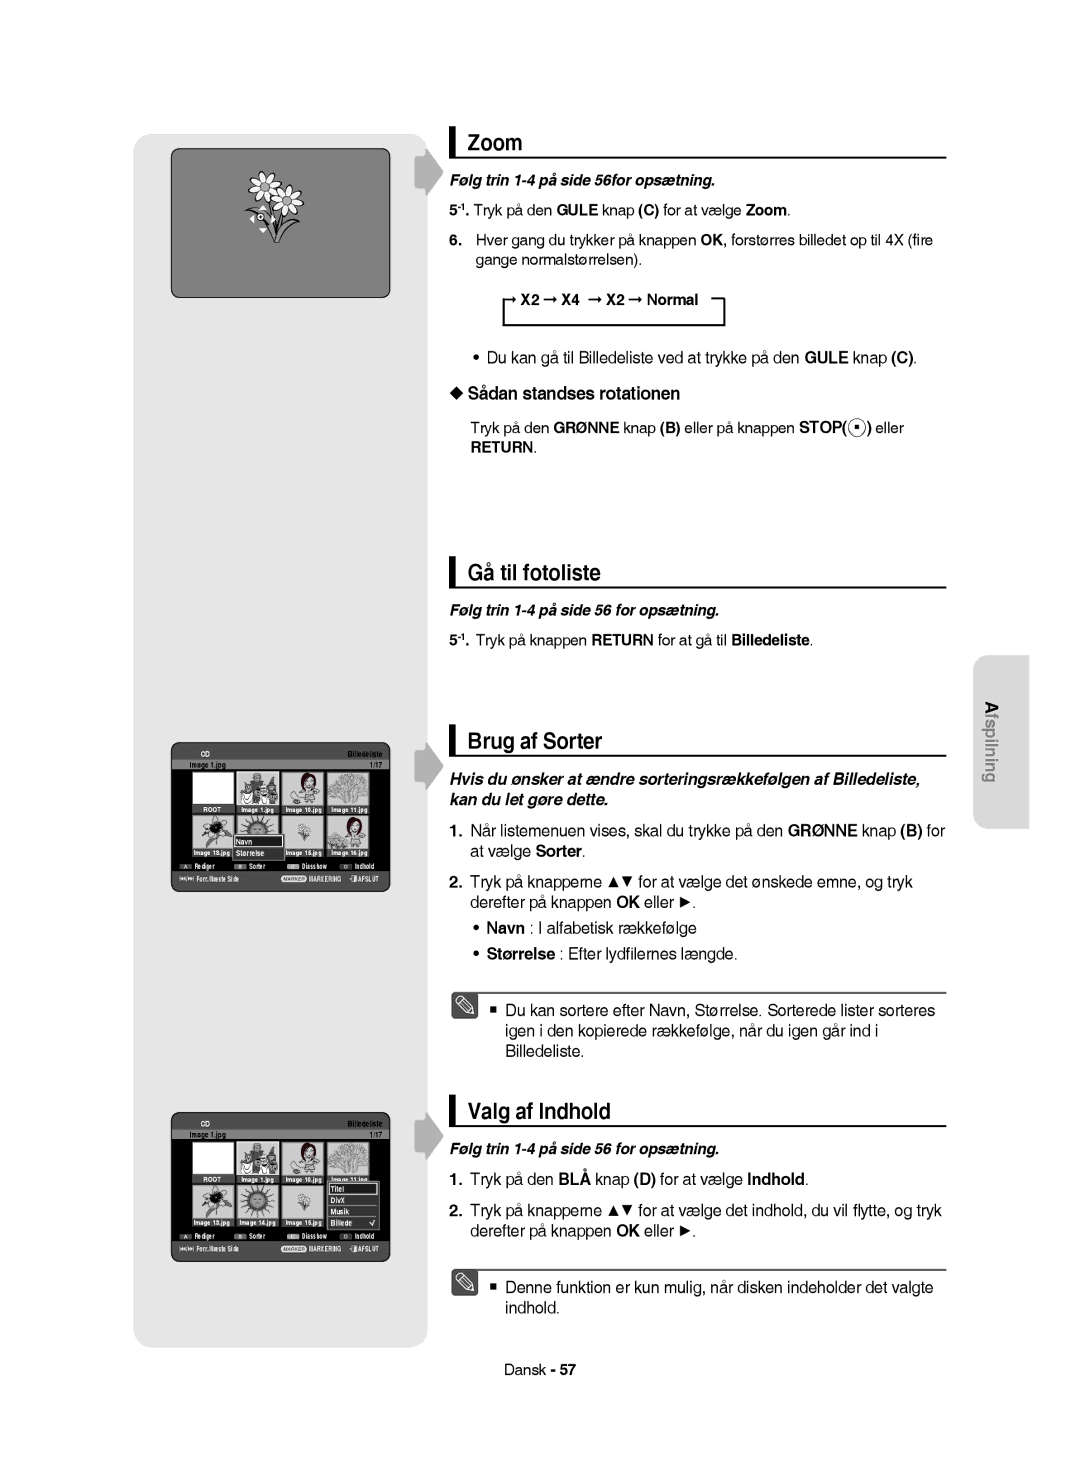 Samsung DVD-HR754/XEE manual Zoom, Gå til fotoliste, X2 X4 X2 Normal, Tryk på den Grønne knap B eller på knappen Stop eller 